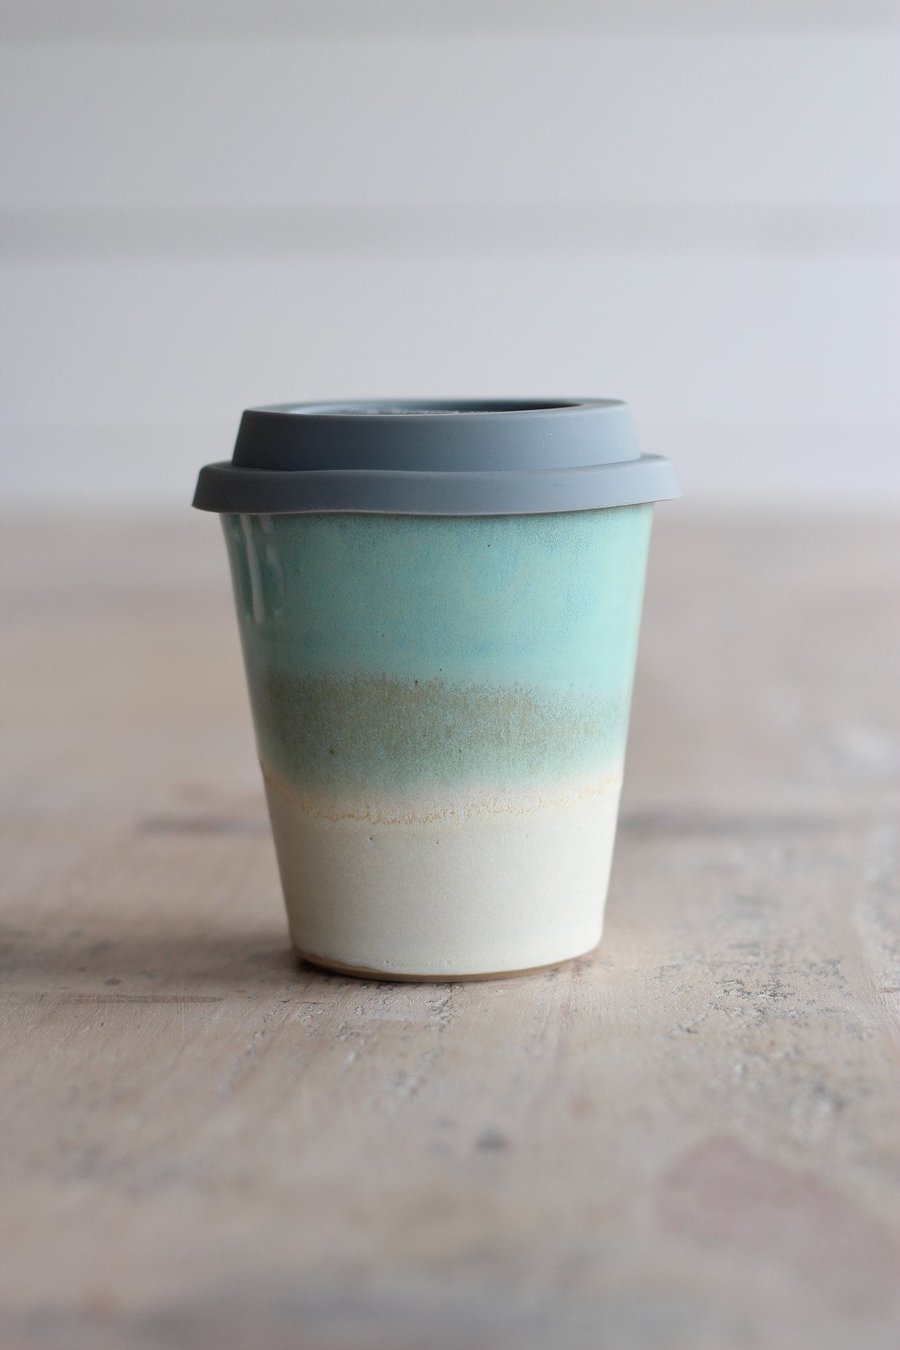 Ceramic Travel Mug - Handmade Pottery Keep Cup - Turquoise & Chalk Reusable Cup